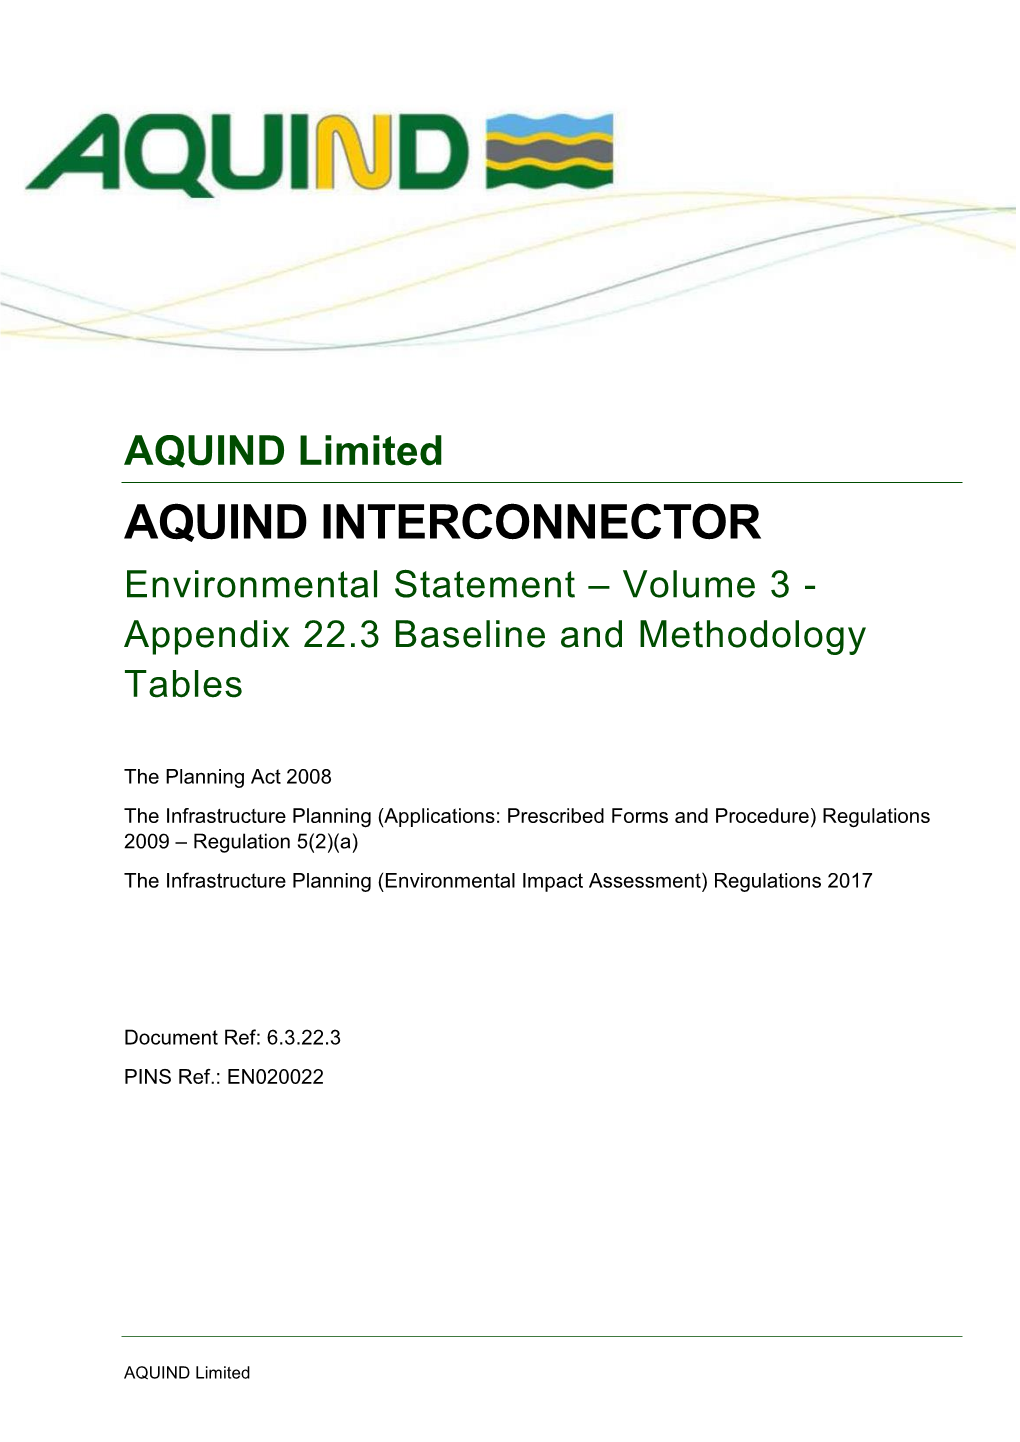 AQUIND INTERCONNECTOR Environmental Statement – Volume 3 - Appendix 22.3 Baseline and Methodology Tables